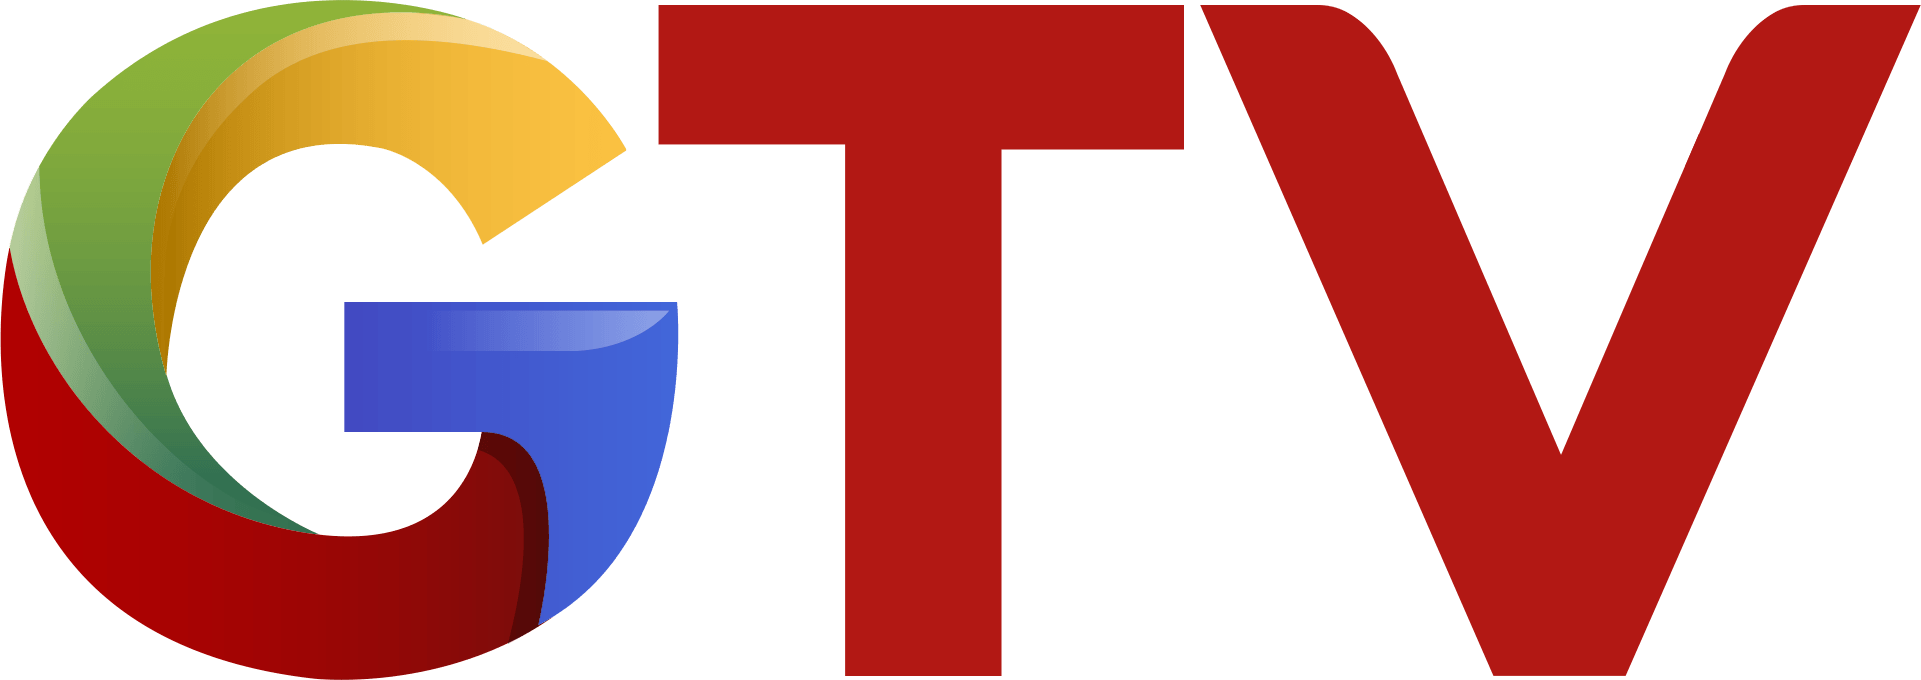 GTV Logo - GTV logo (2017).png